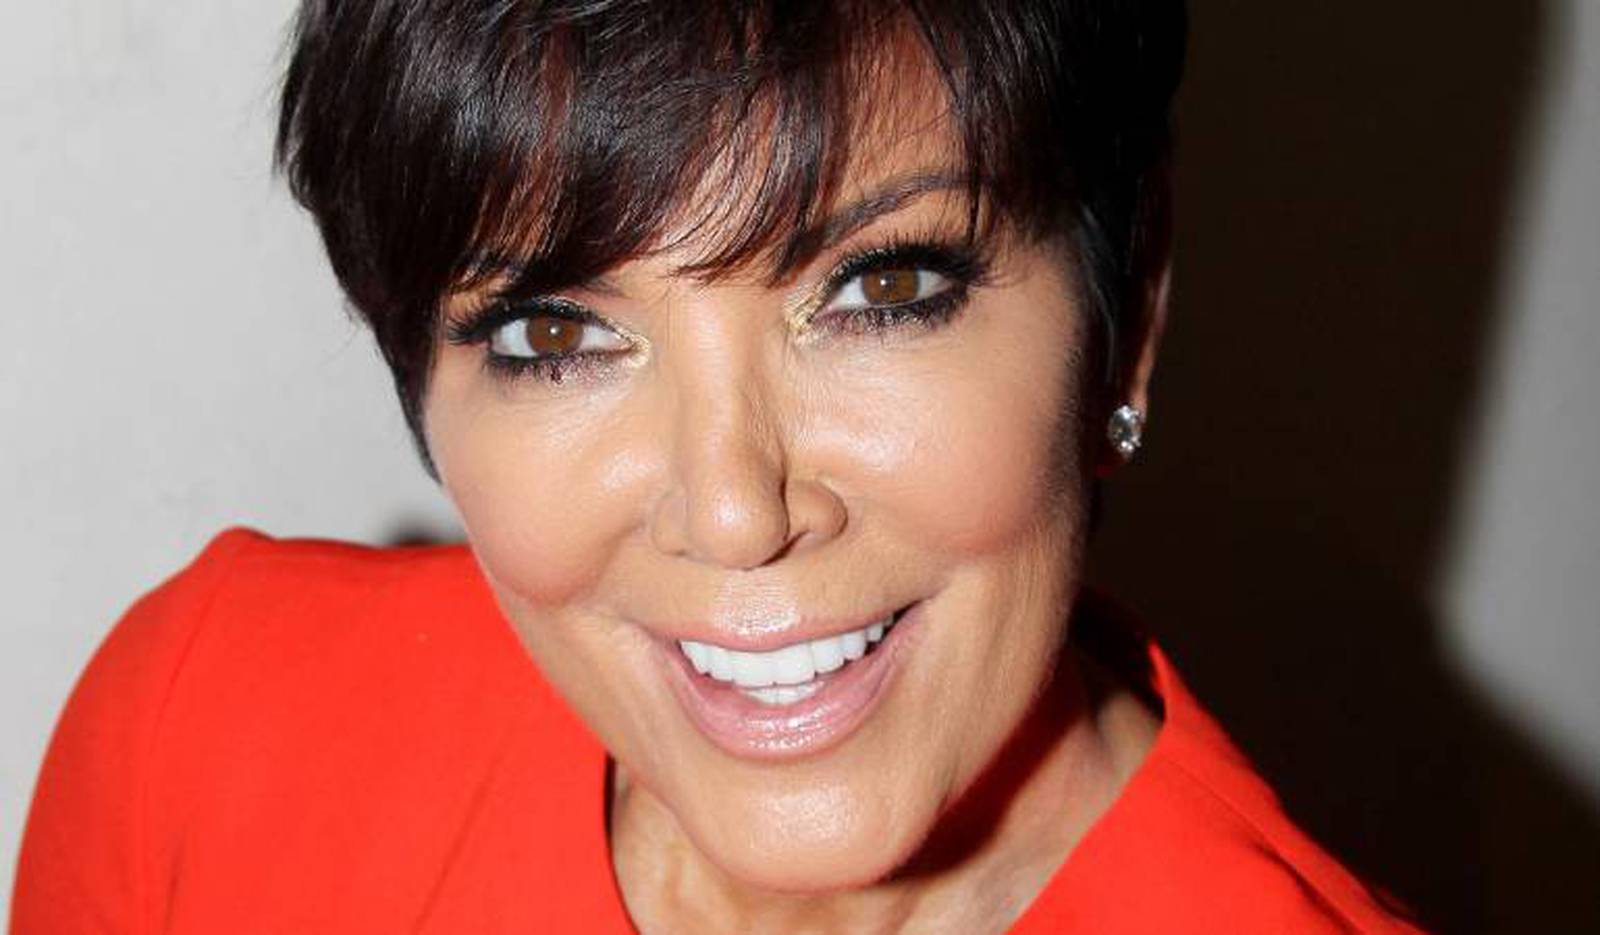 Kim Kardashian Xxxxx - Video porno de Kim Kardashian fue publicado por su madre Video porno de Kim  Kardashian habrÃ­a sido filtrado por su madre : Video porno de Kim Kardashian  habrÃ­a sido filtrado por su madre